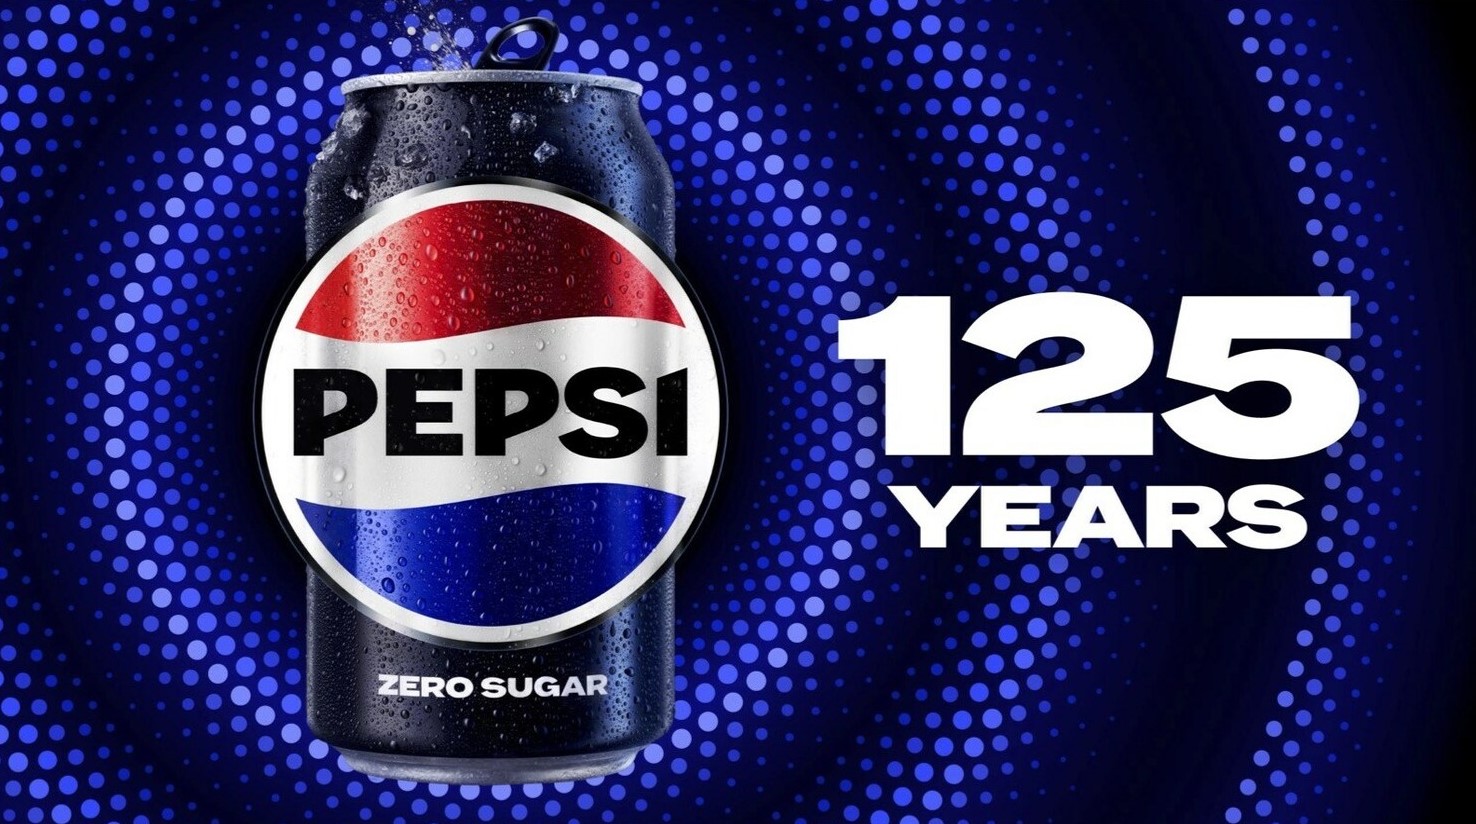 American soft drink company Pepsi